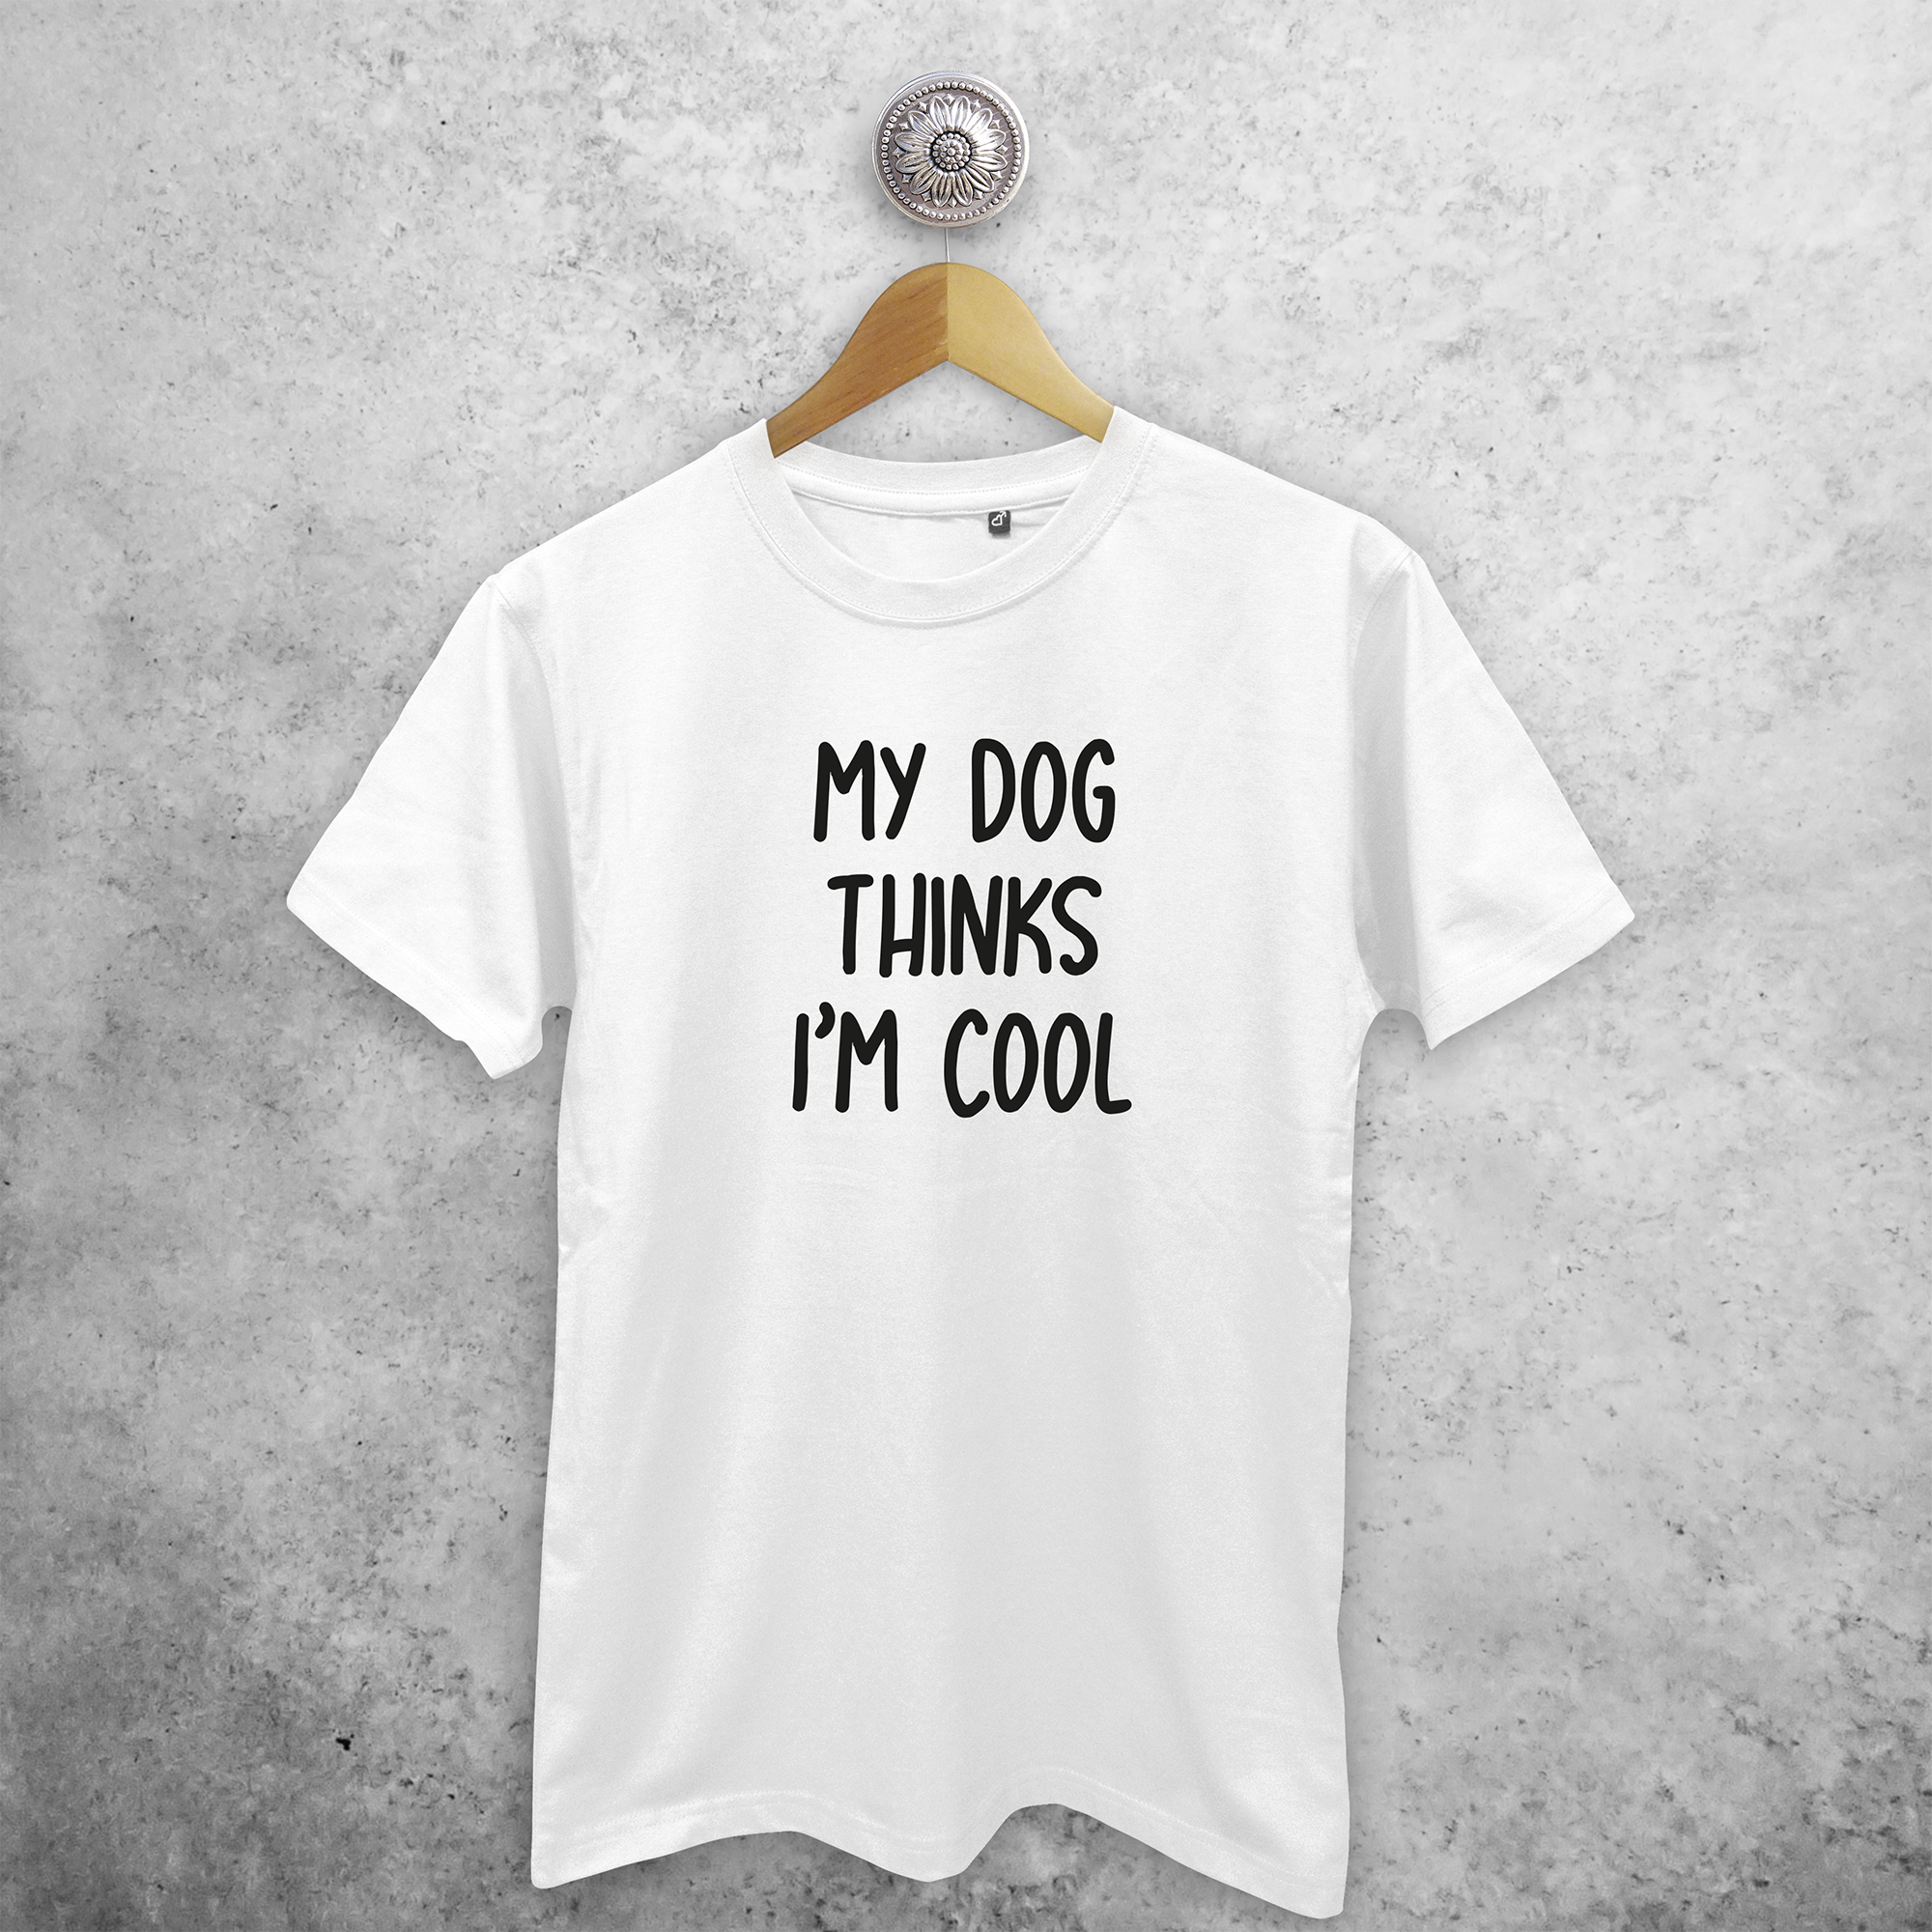 'My dog thinks I'm cool' adult shirt